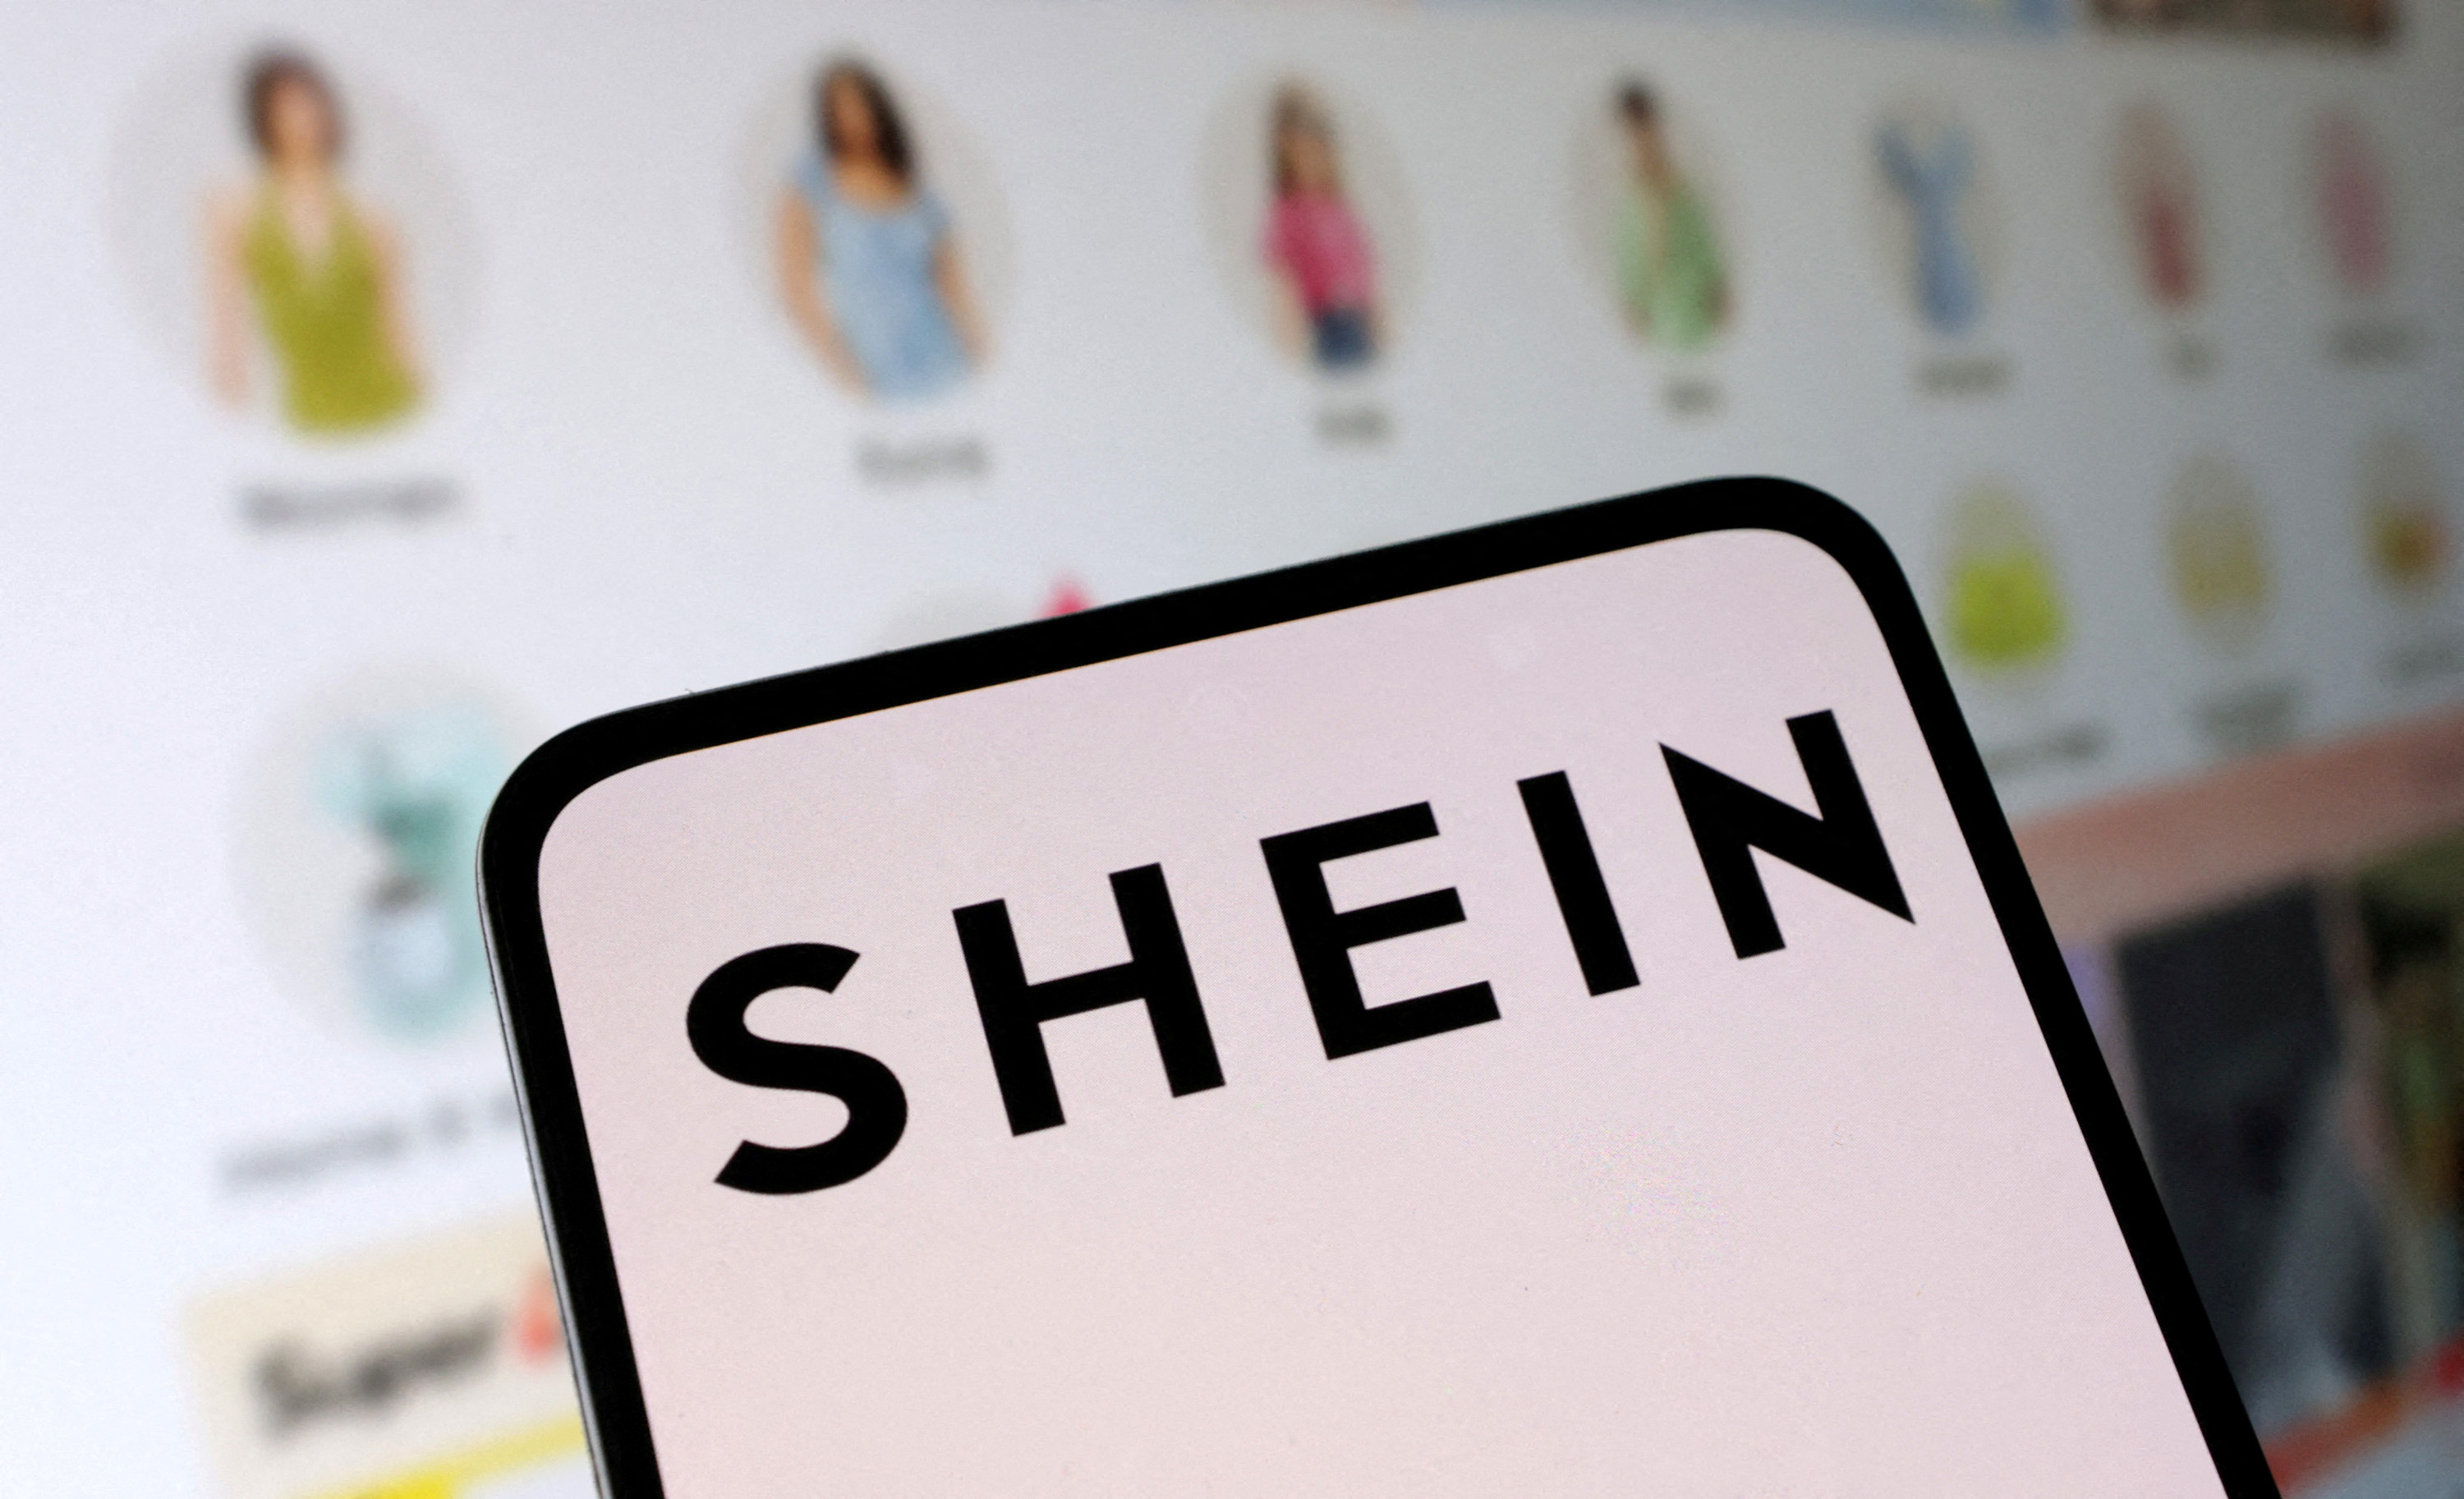 Illustration shows Shein logo